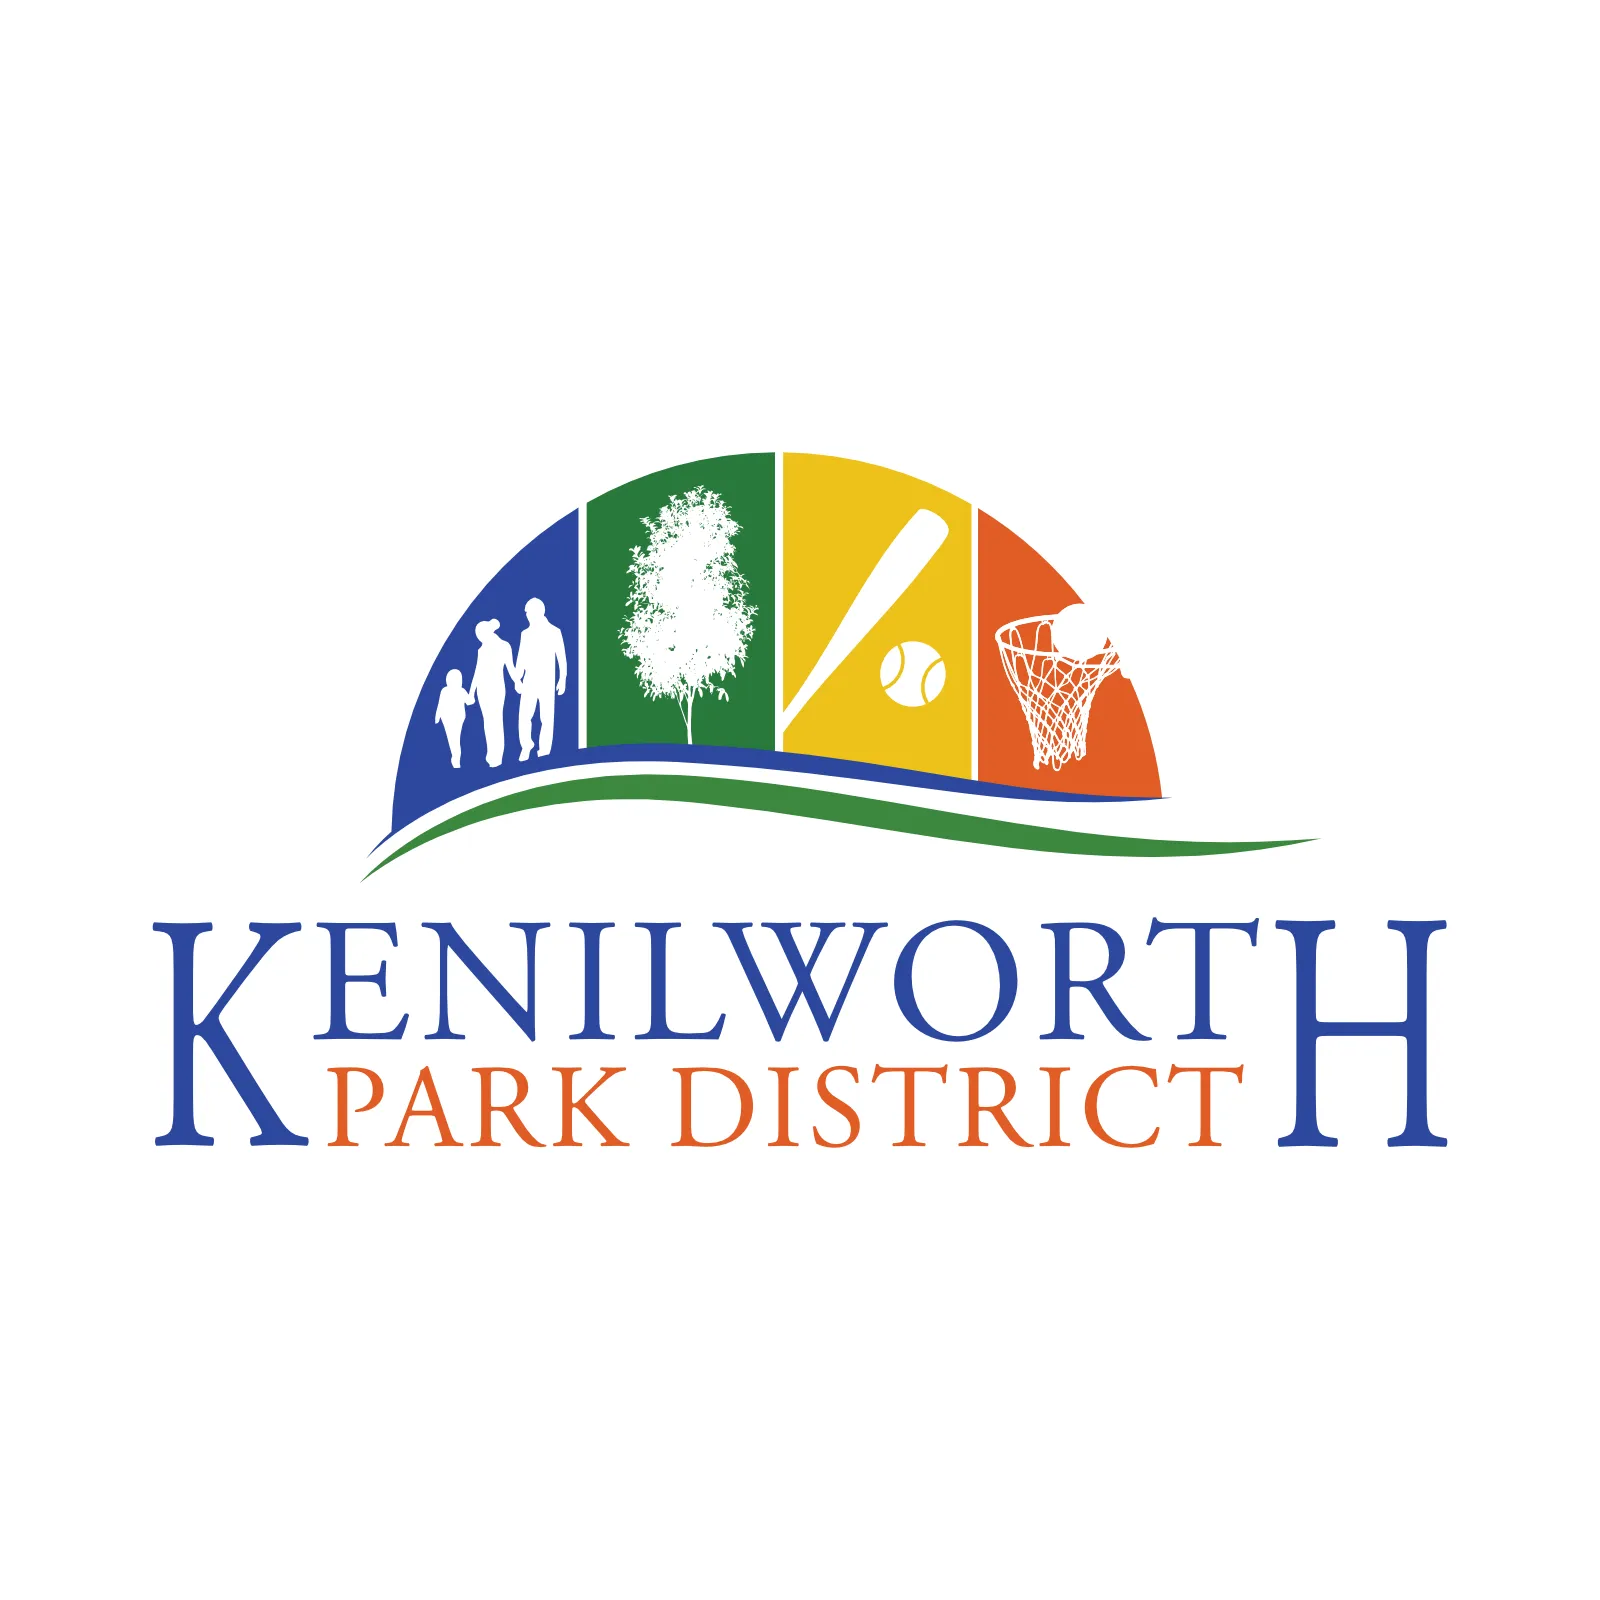 Kenilworth Park District logo